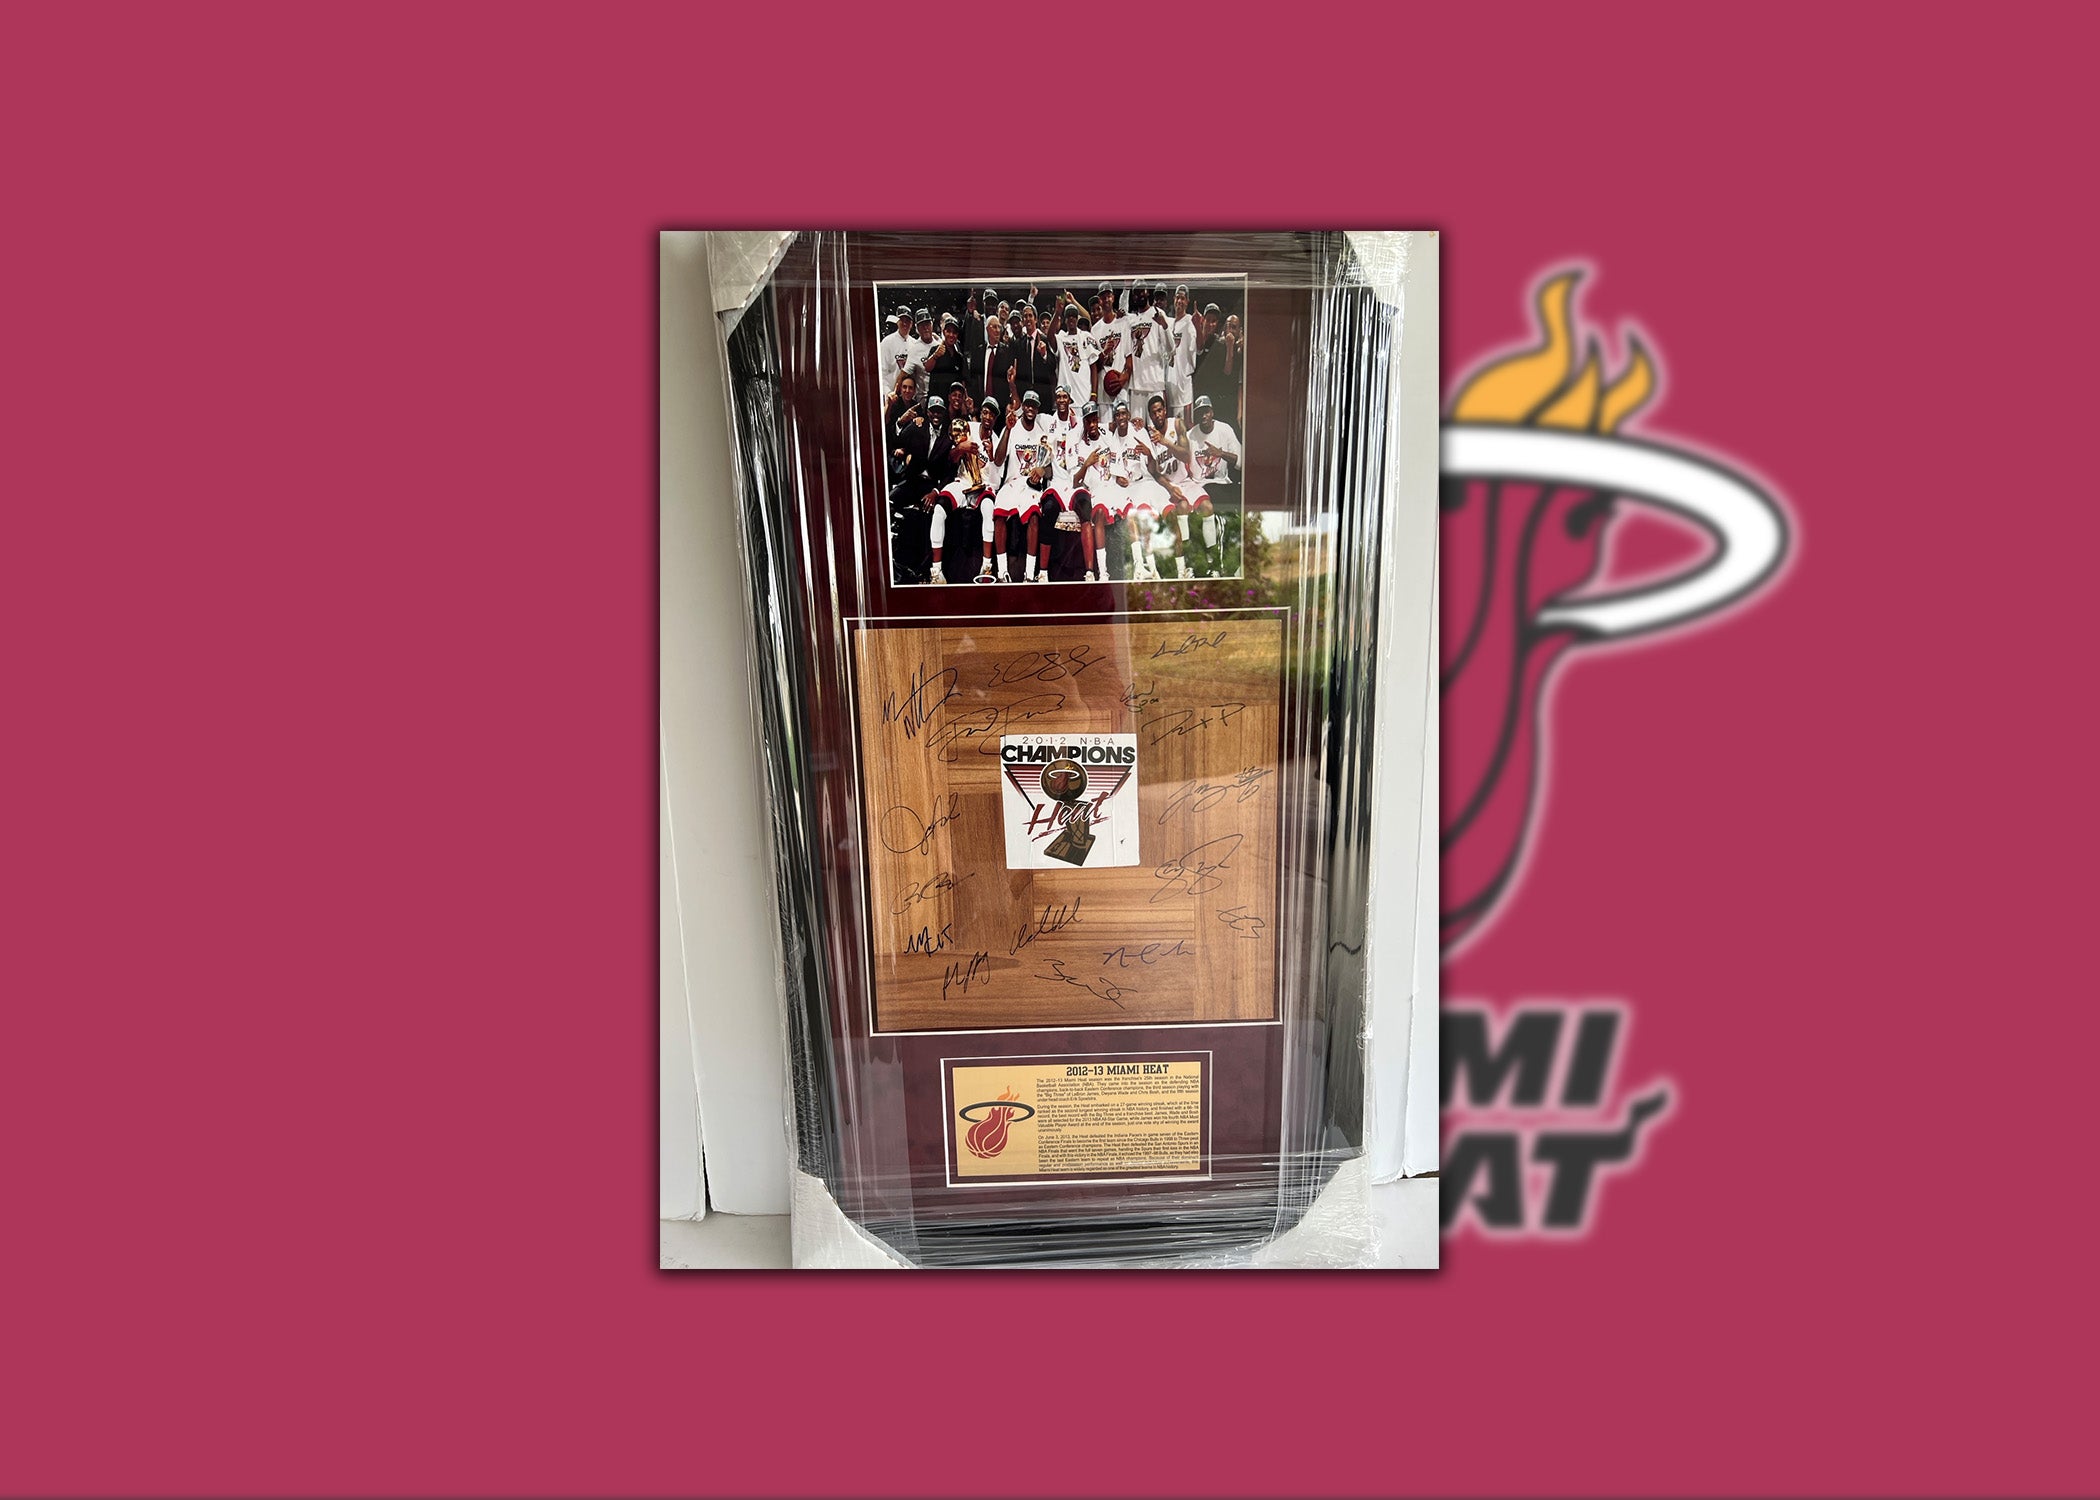 Miami Heat LeBron James, Dwyane Wade, Pat Riley, Erik Spoelstra NBA champions 2012-13 team parquet floorboard signed & framed 32x18 with proof